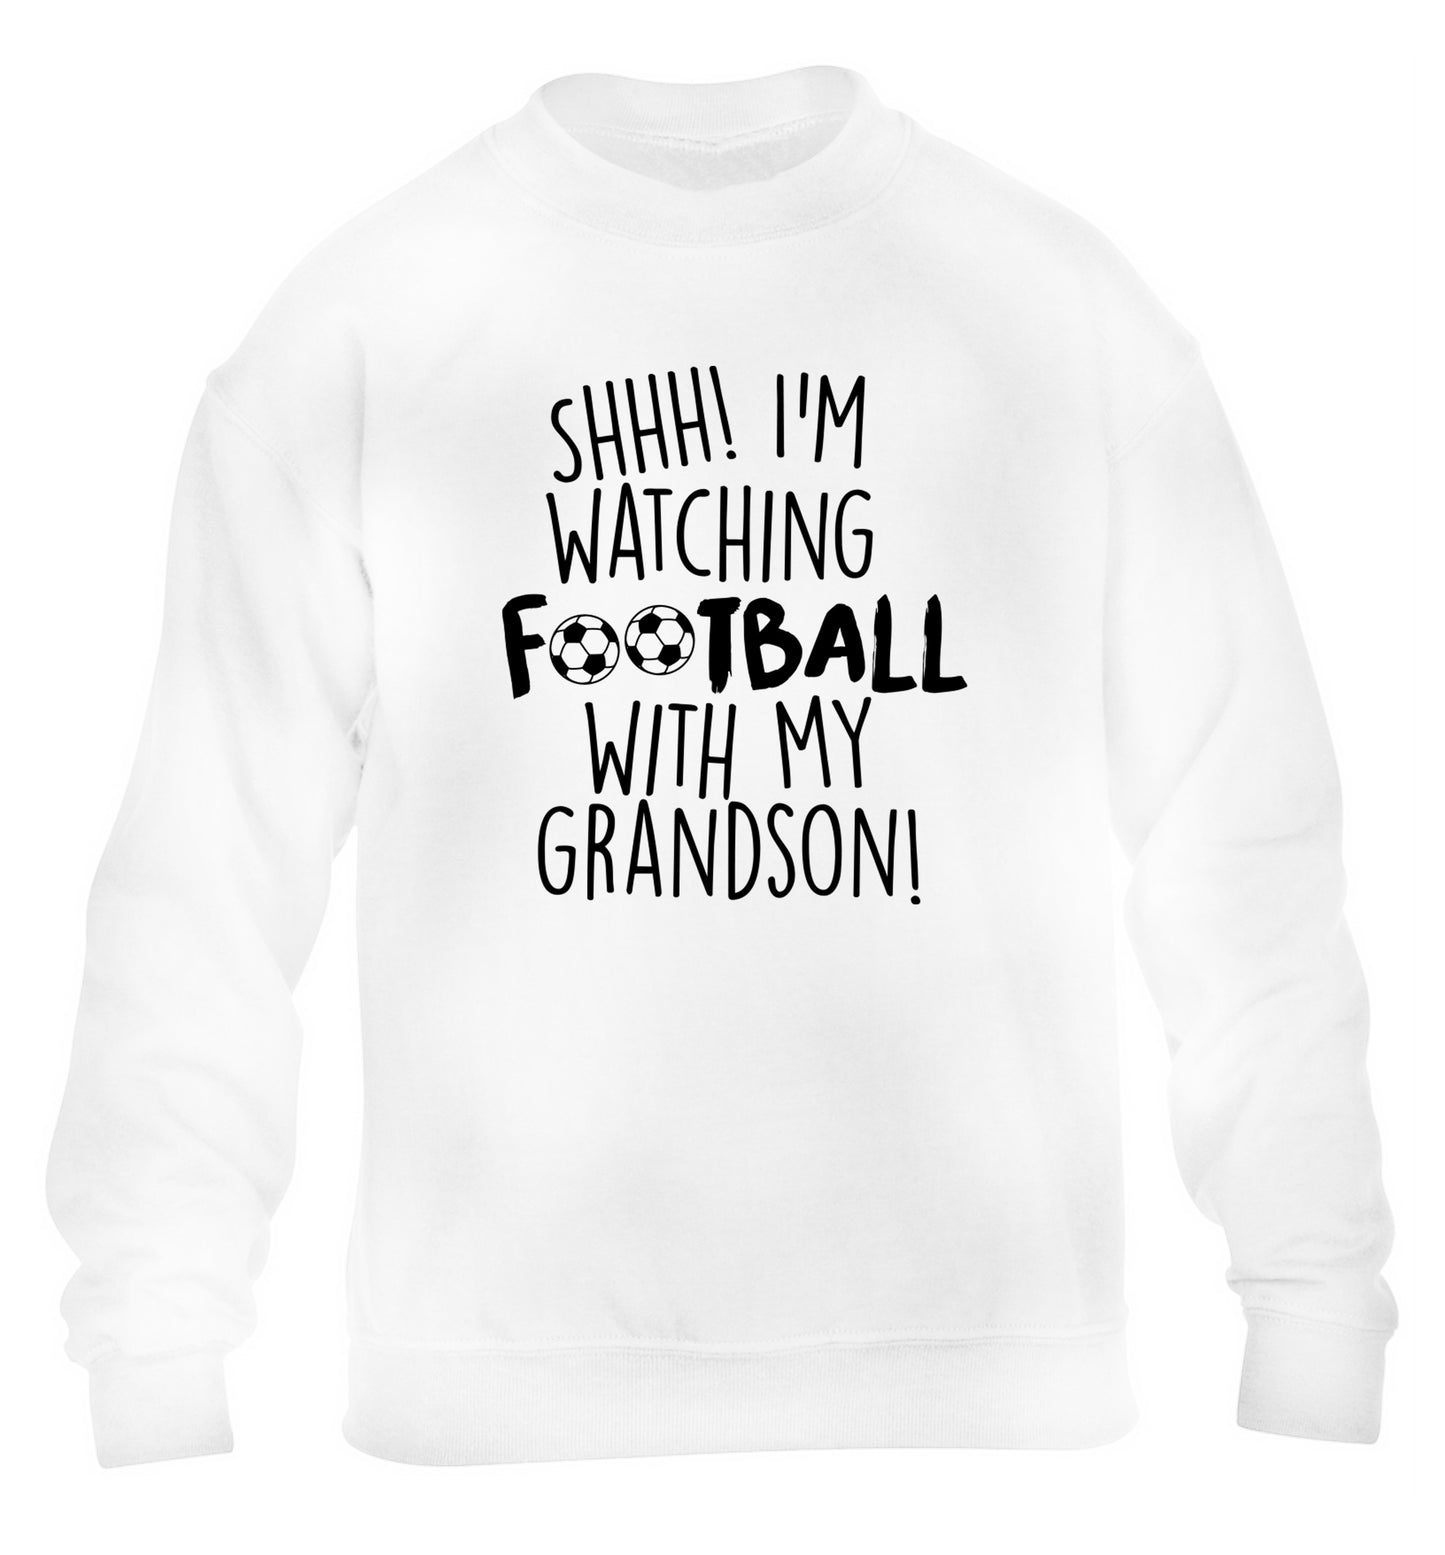 Shhh I'm watching football with my grandson children's white sweater 12-14 Years